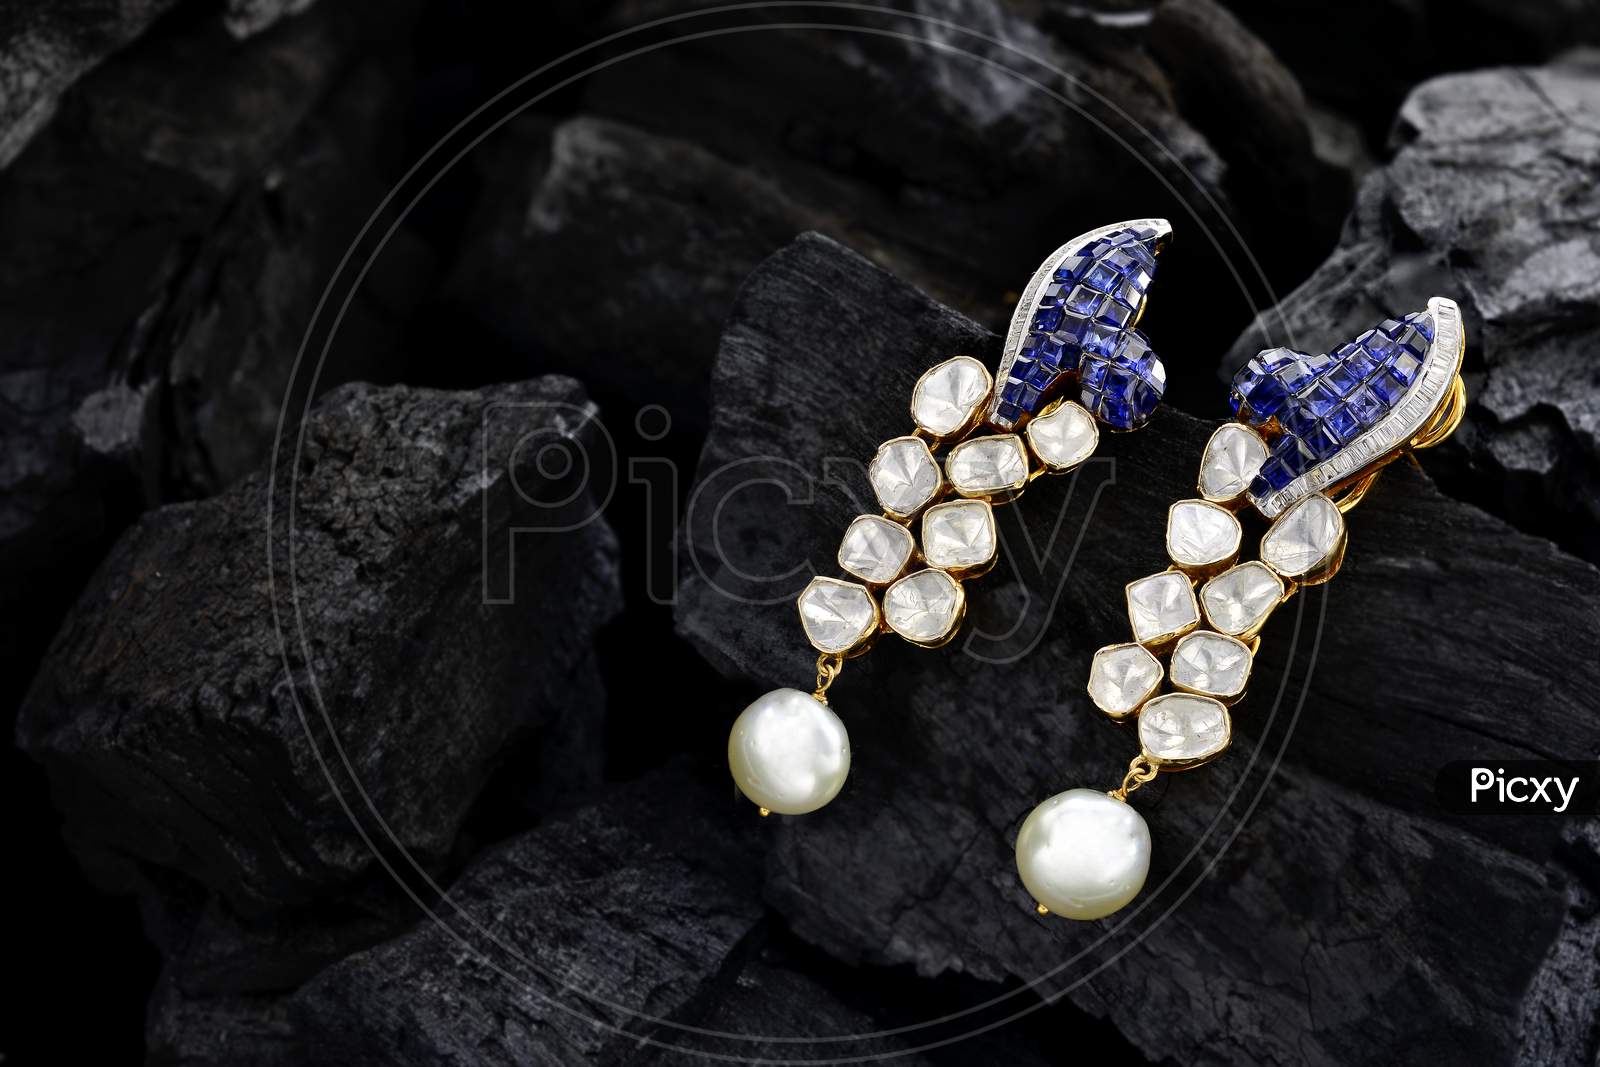 Purple gemstone earrings